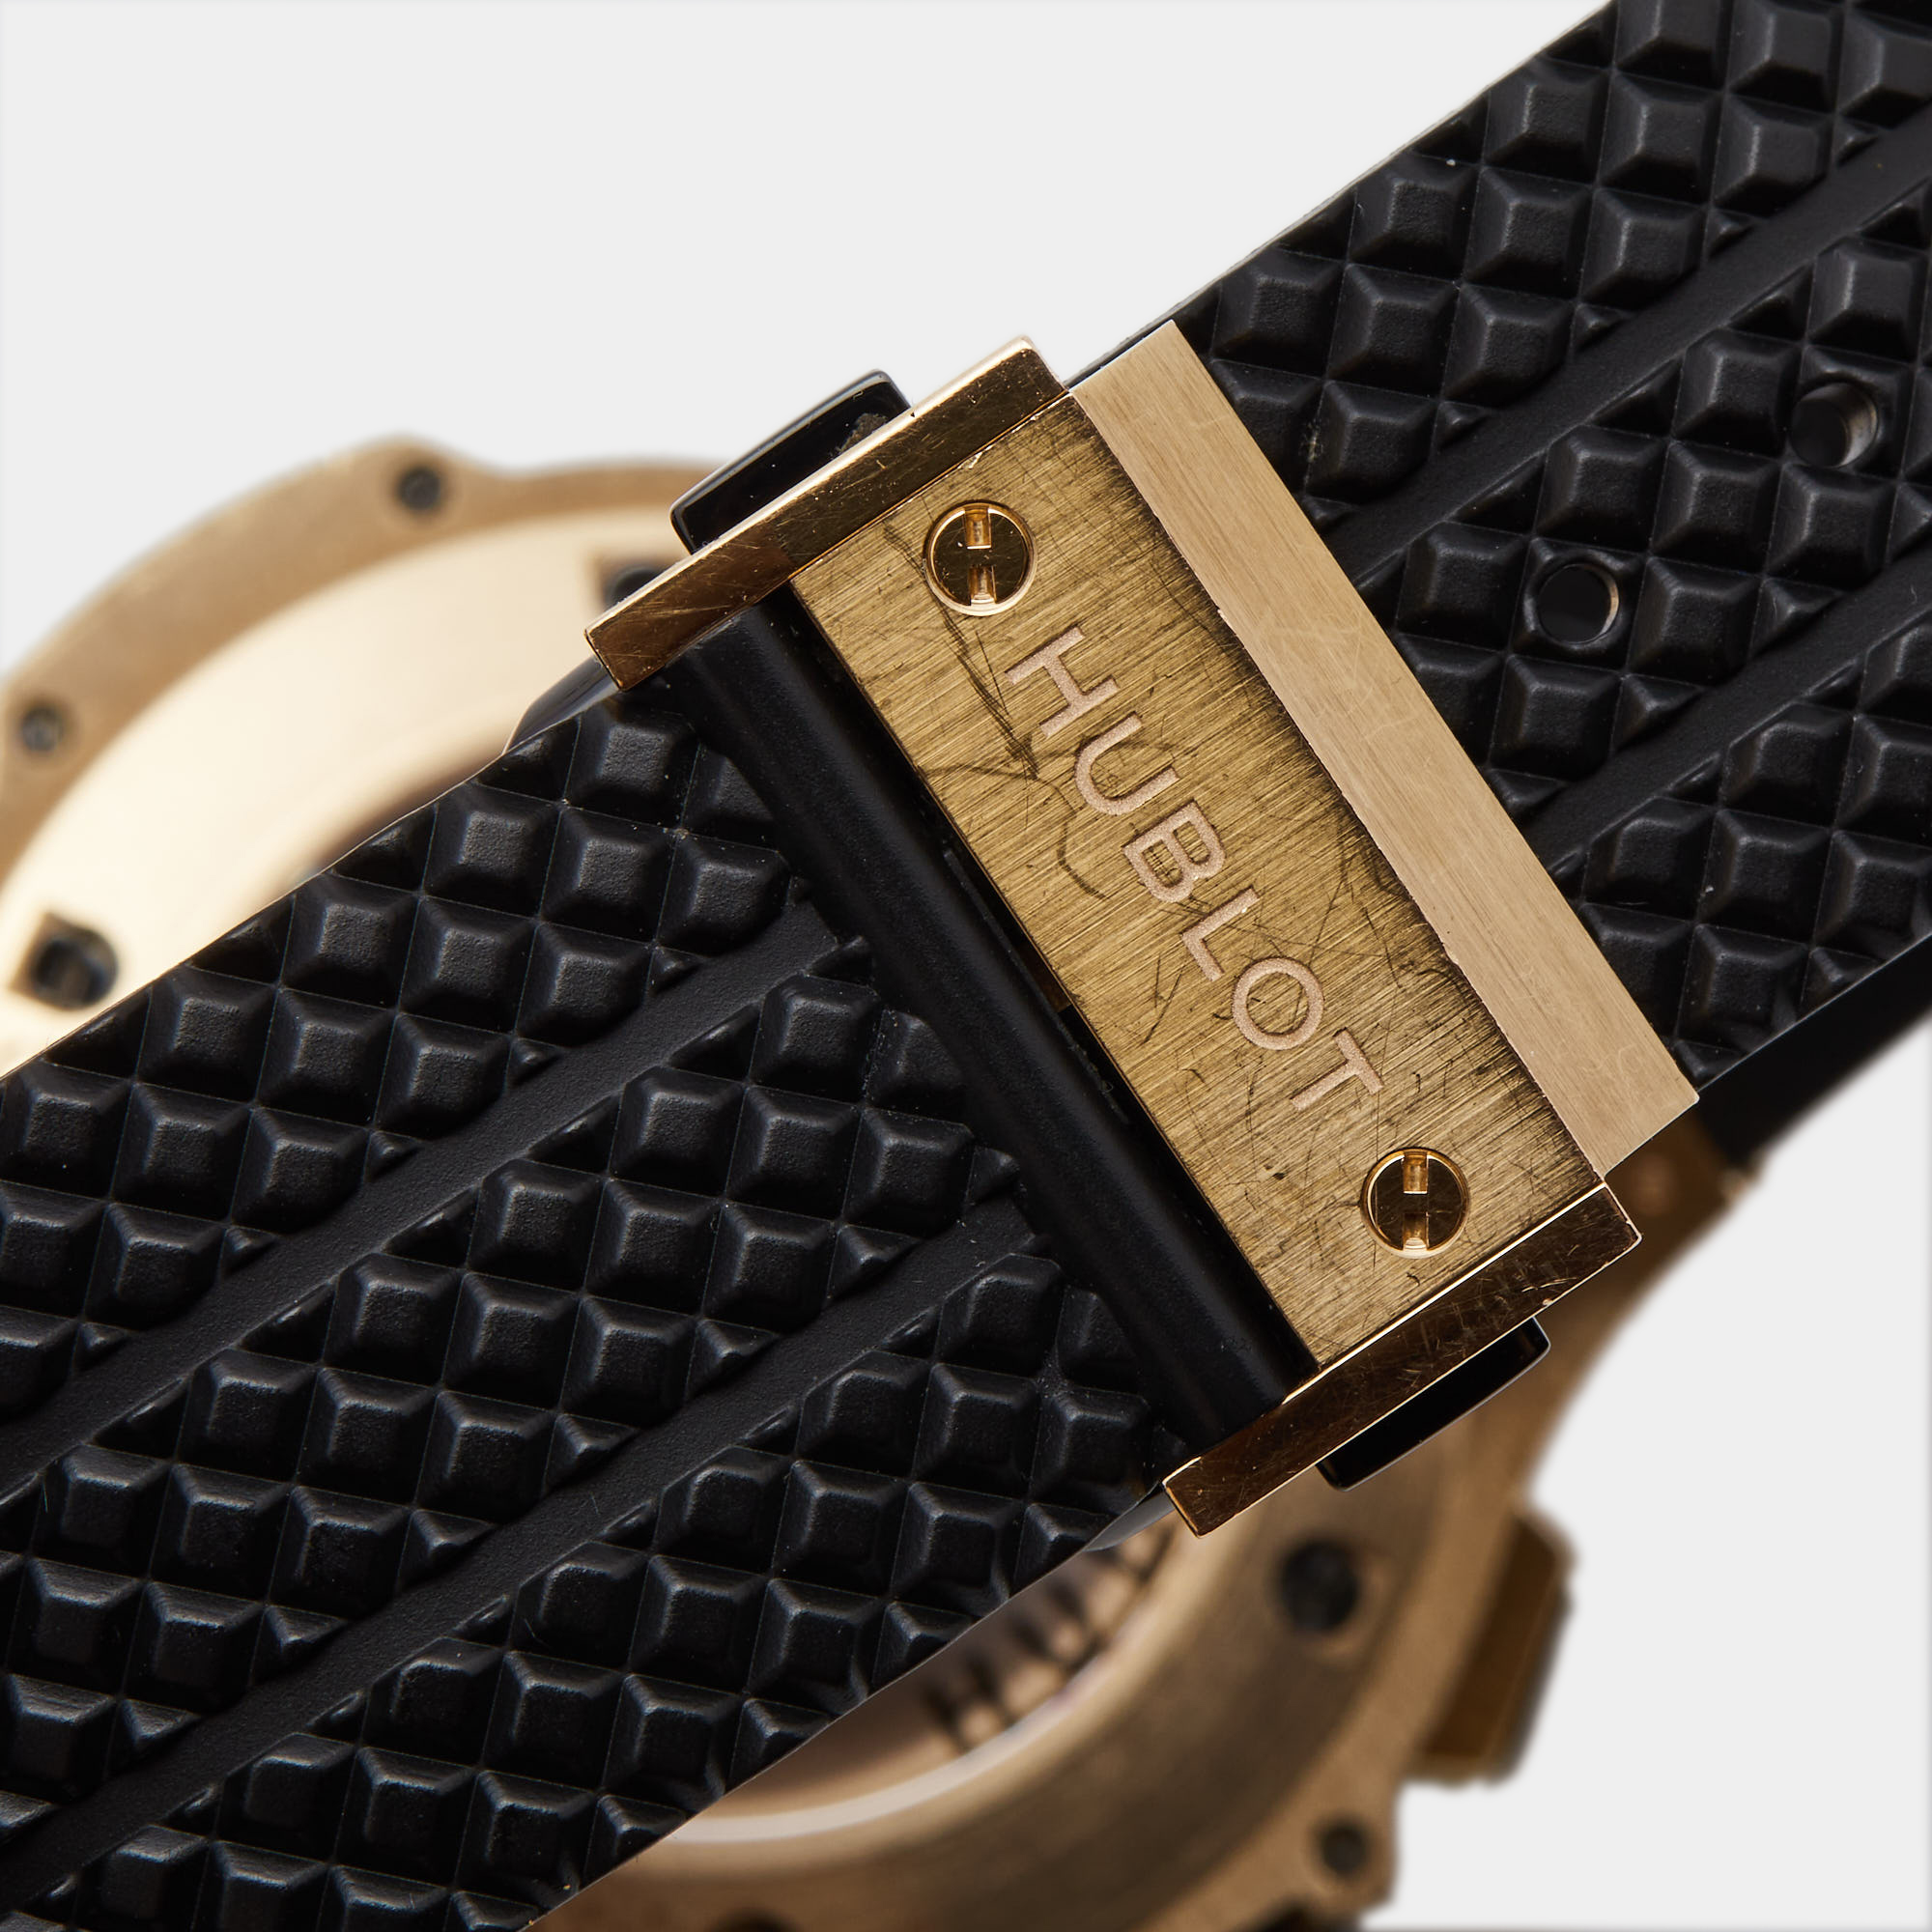 Hublot Black 18k Rose Gold Ceramic Rubber Big Bang 301.PB.131.RX Men's Wristwatch 44 Mm